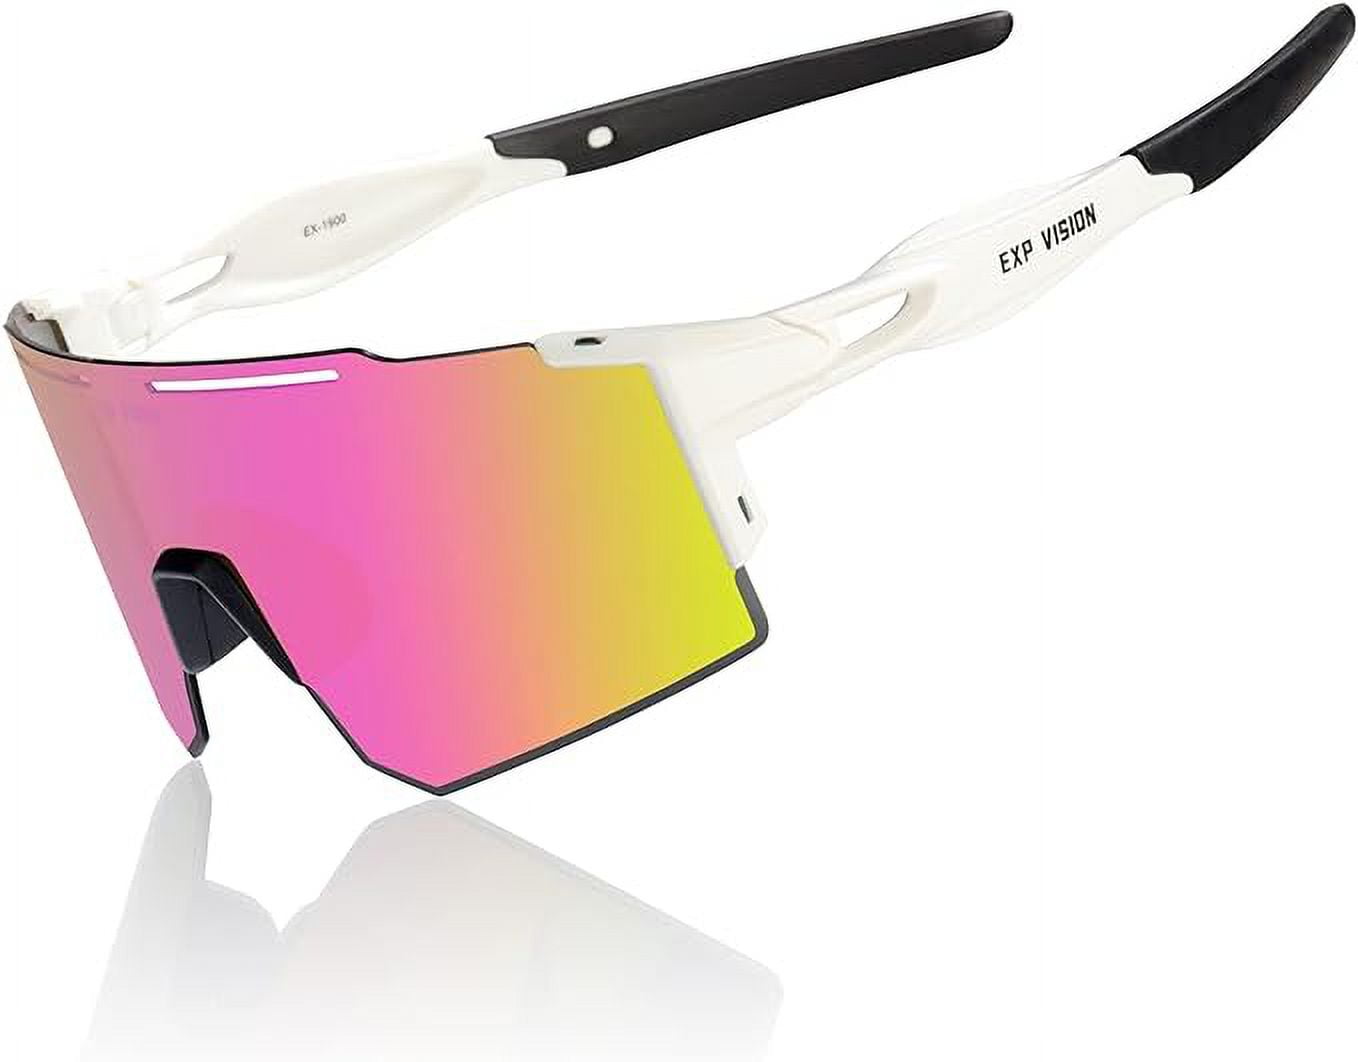 Glasses polarized Fishing Eyewear Bicycle Glass Bike Riding Fishing Hiking  Sunglasses Glasses for Fishing Cycling Glasses